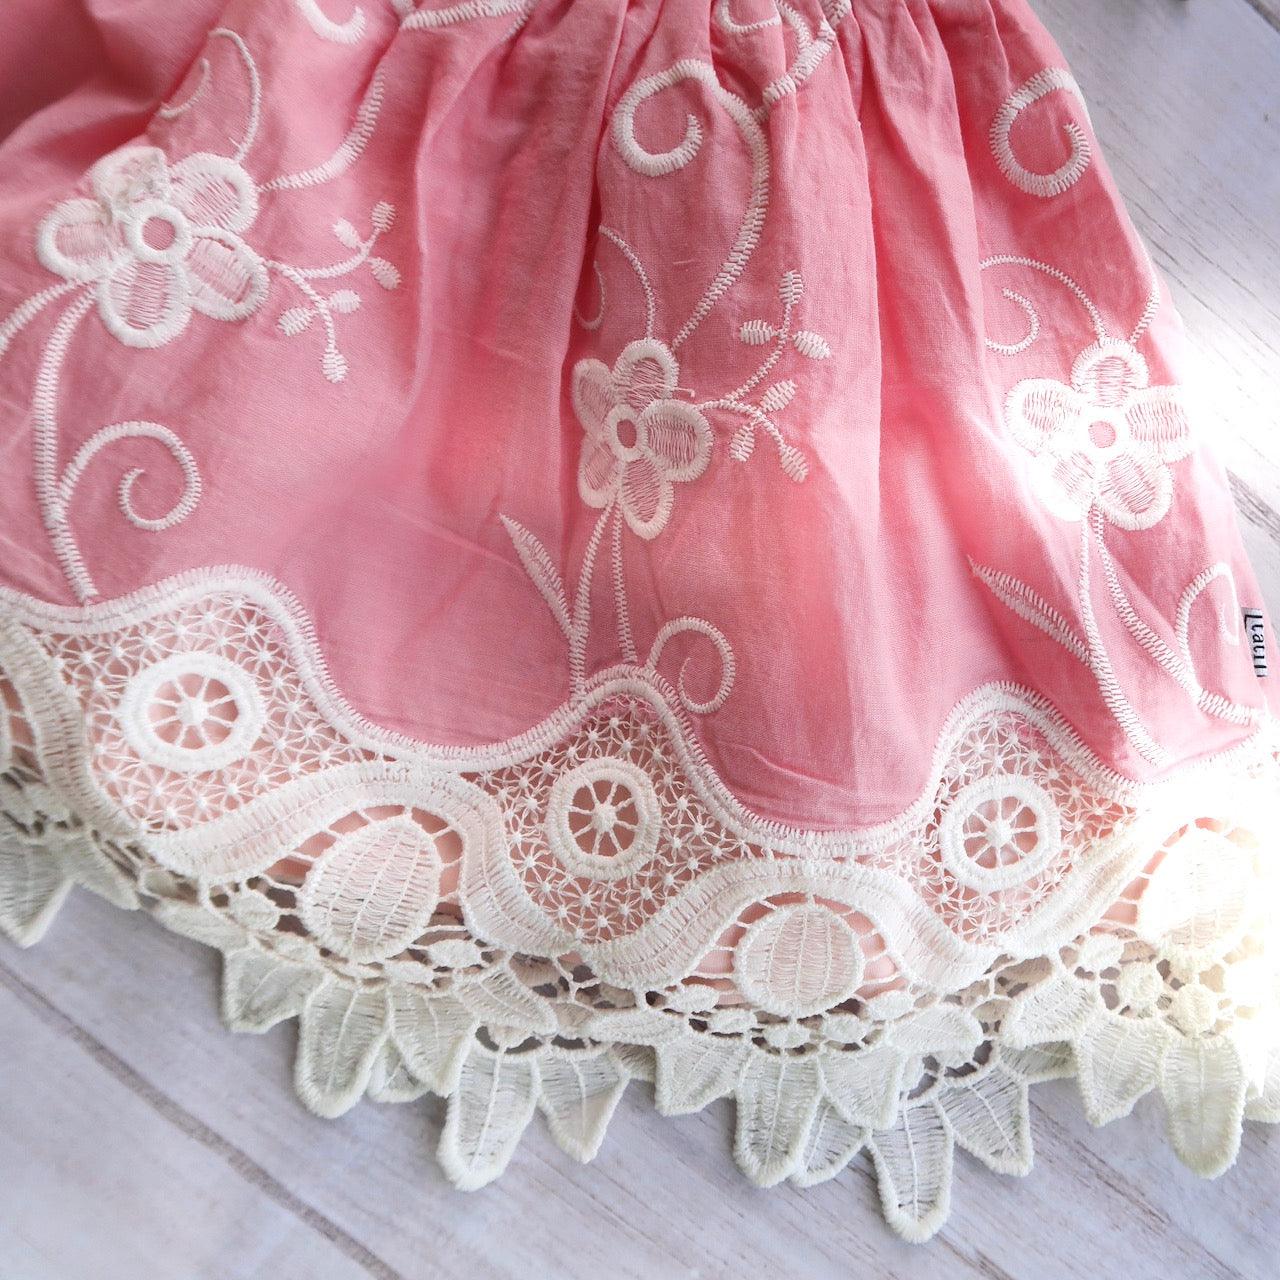 Iris Dress in Fancy Pink Lace - Lil' Tati